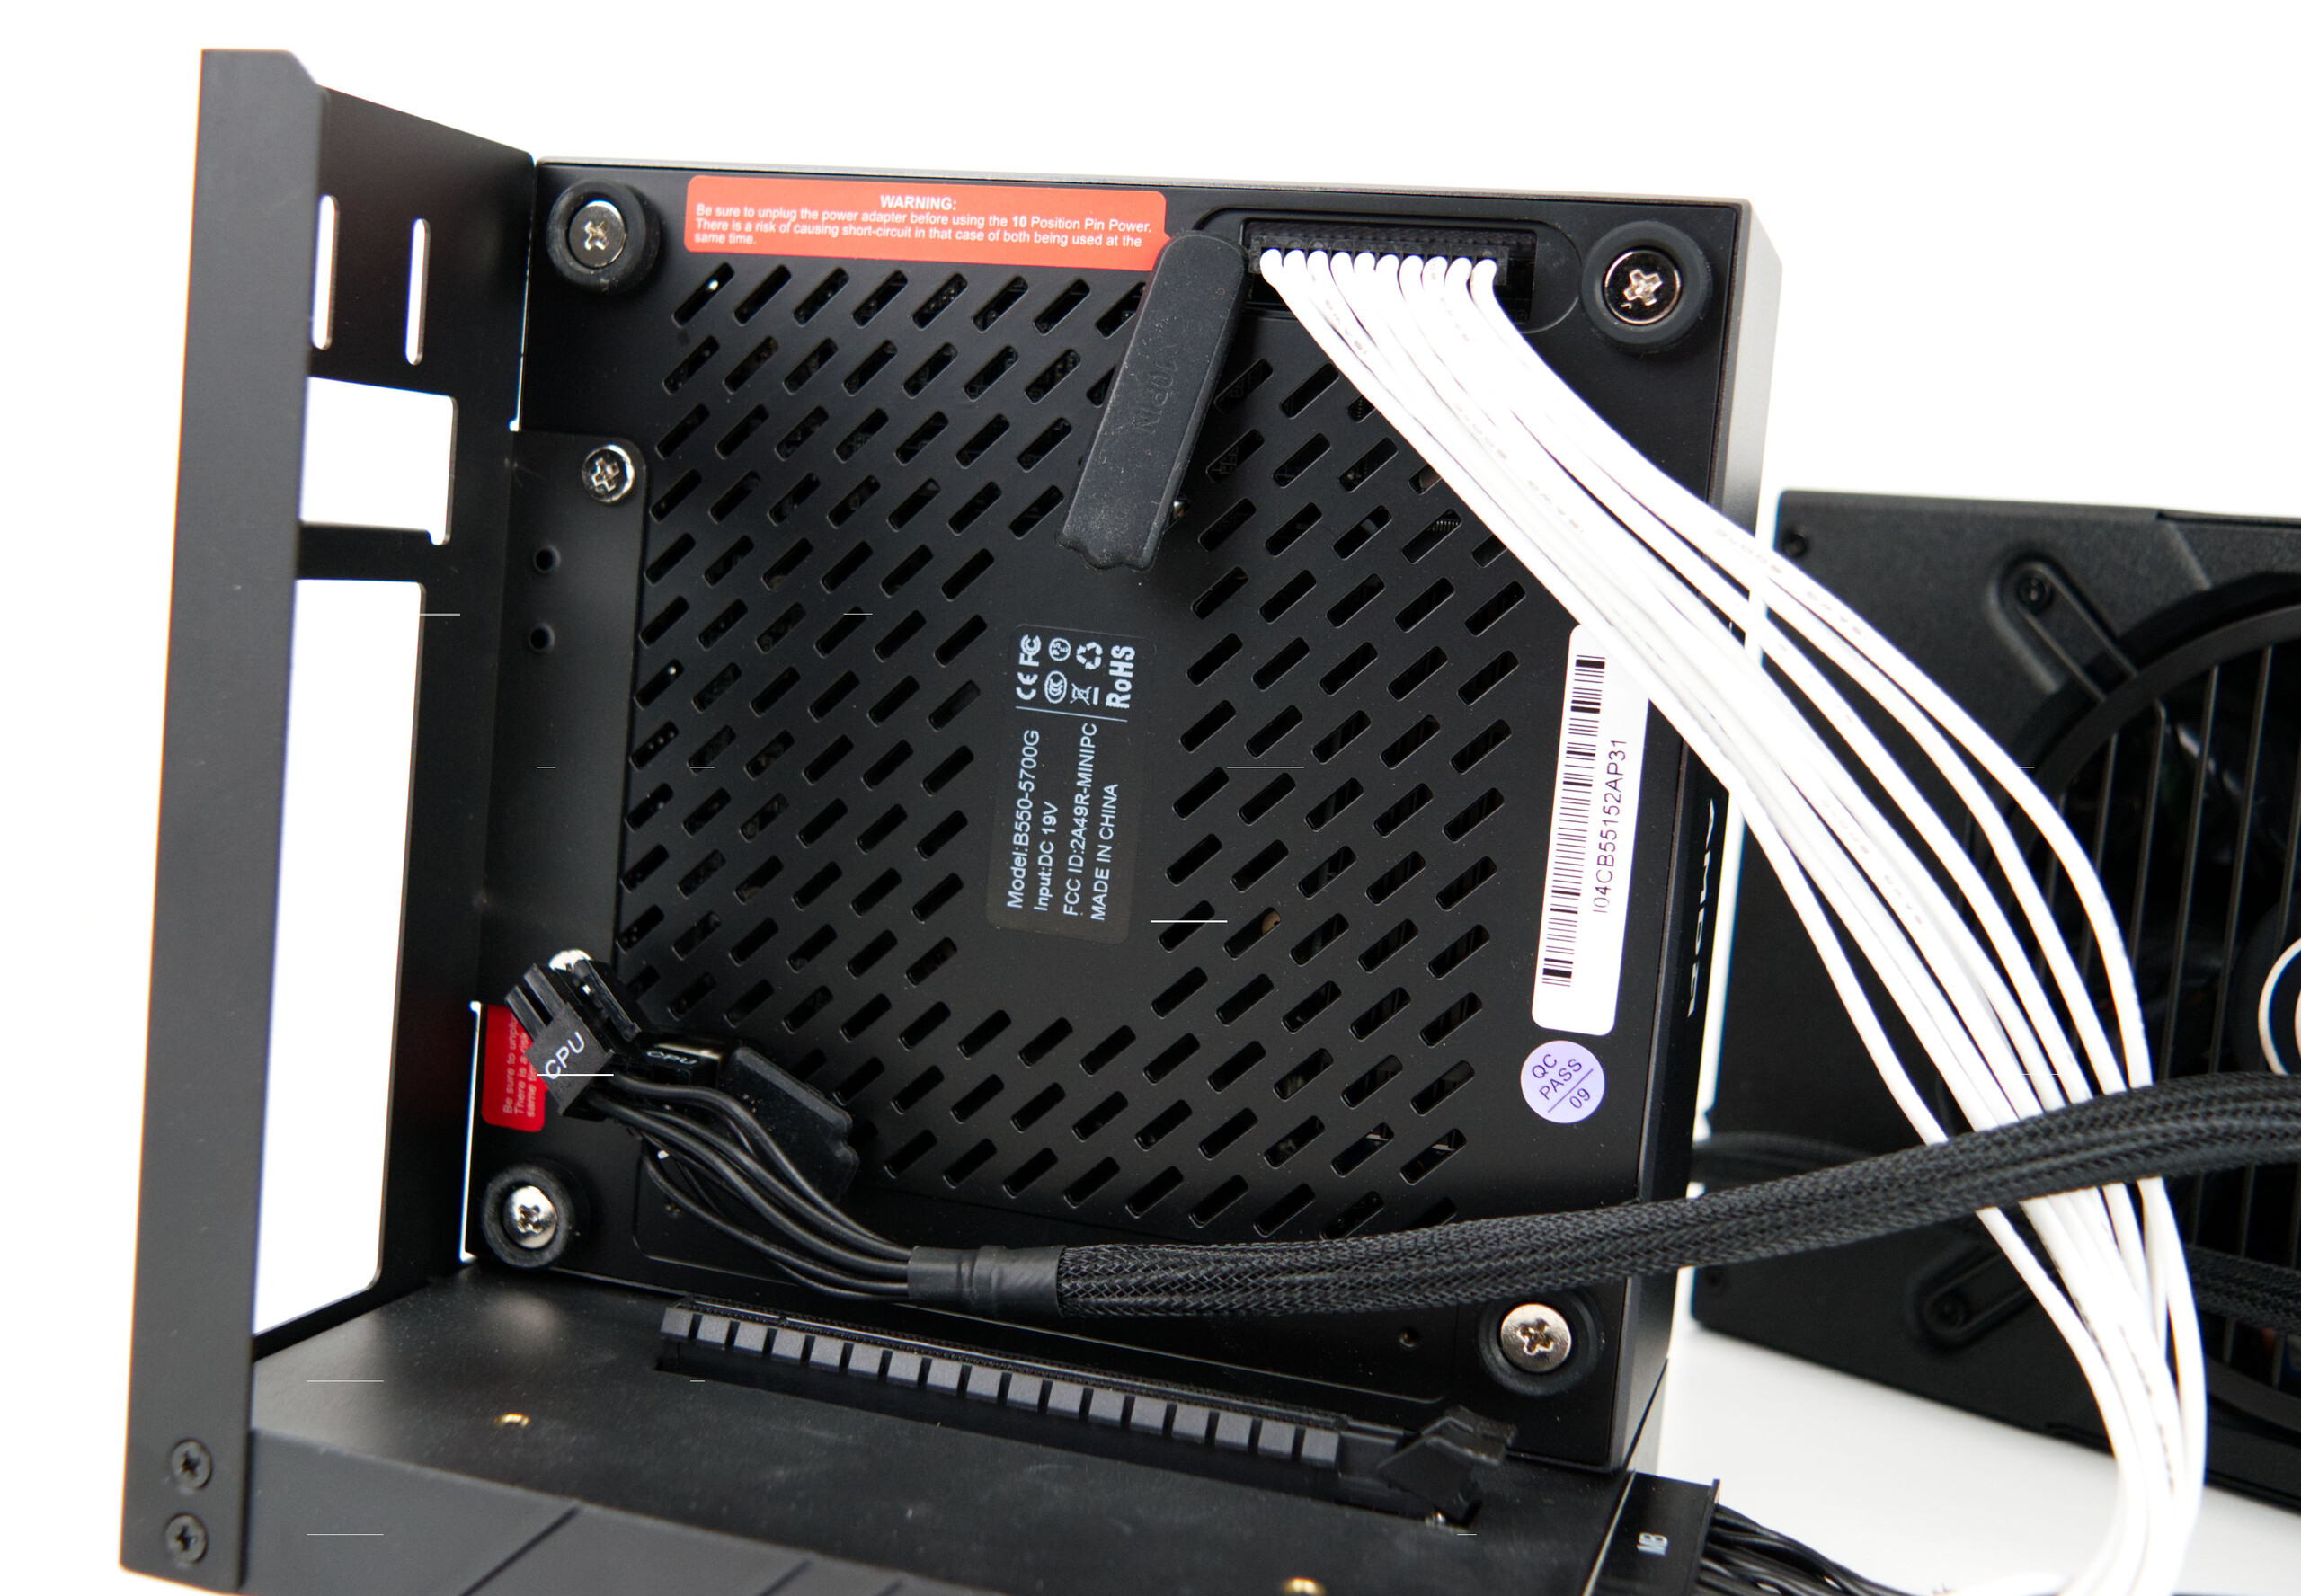 Minisforum Elitemini B550, un mini-PC avec un dock pour carte